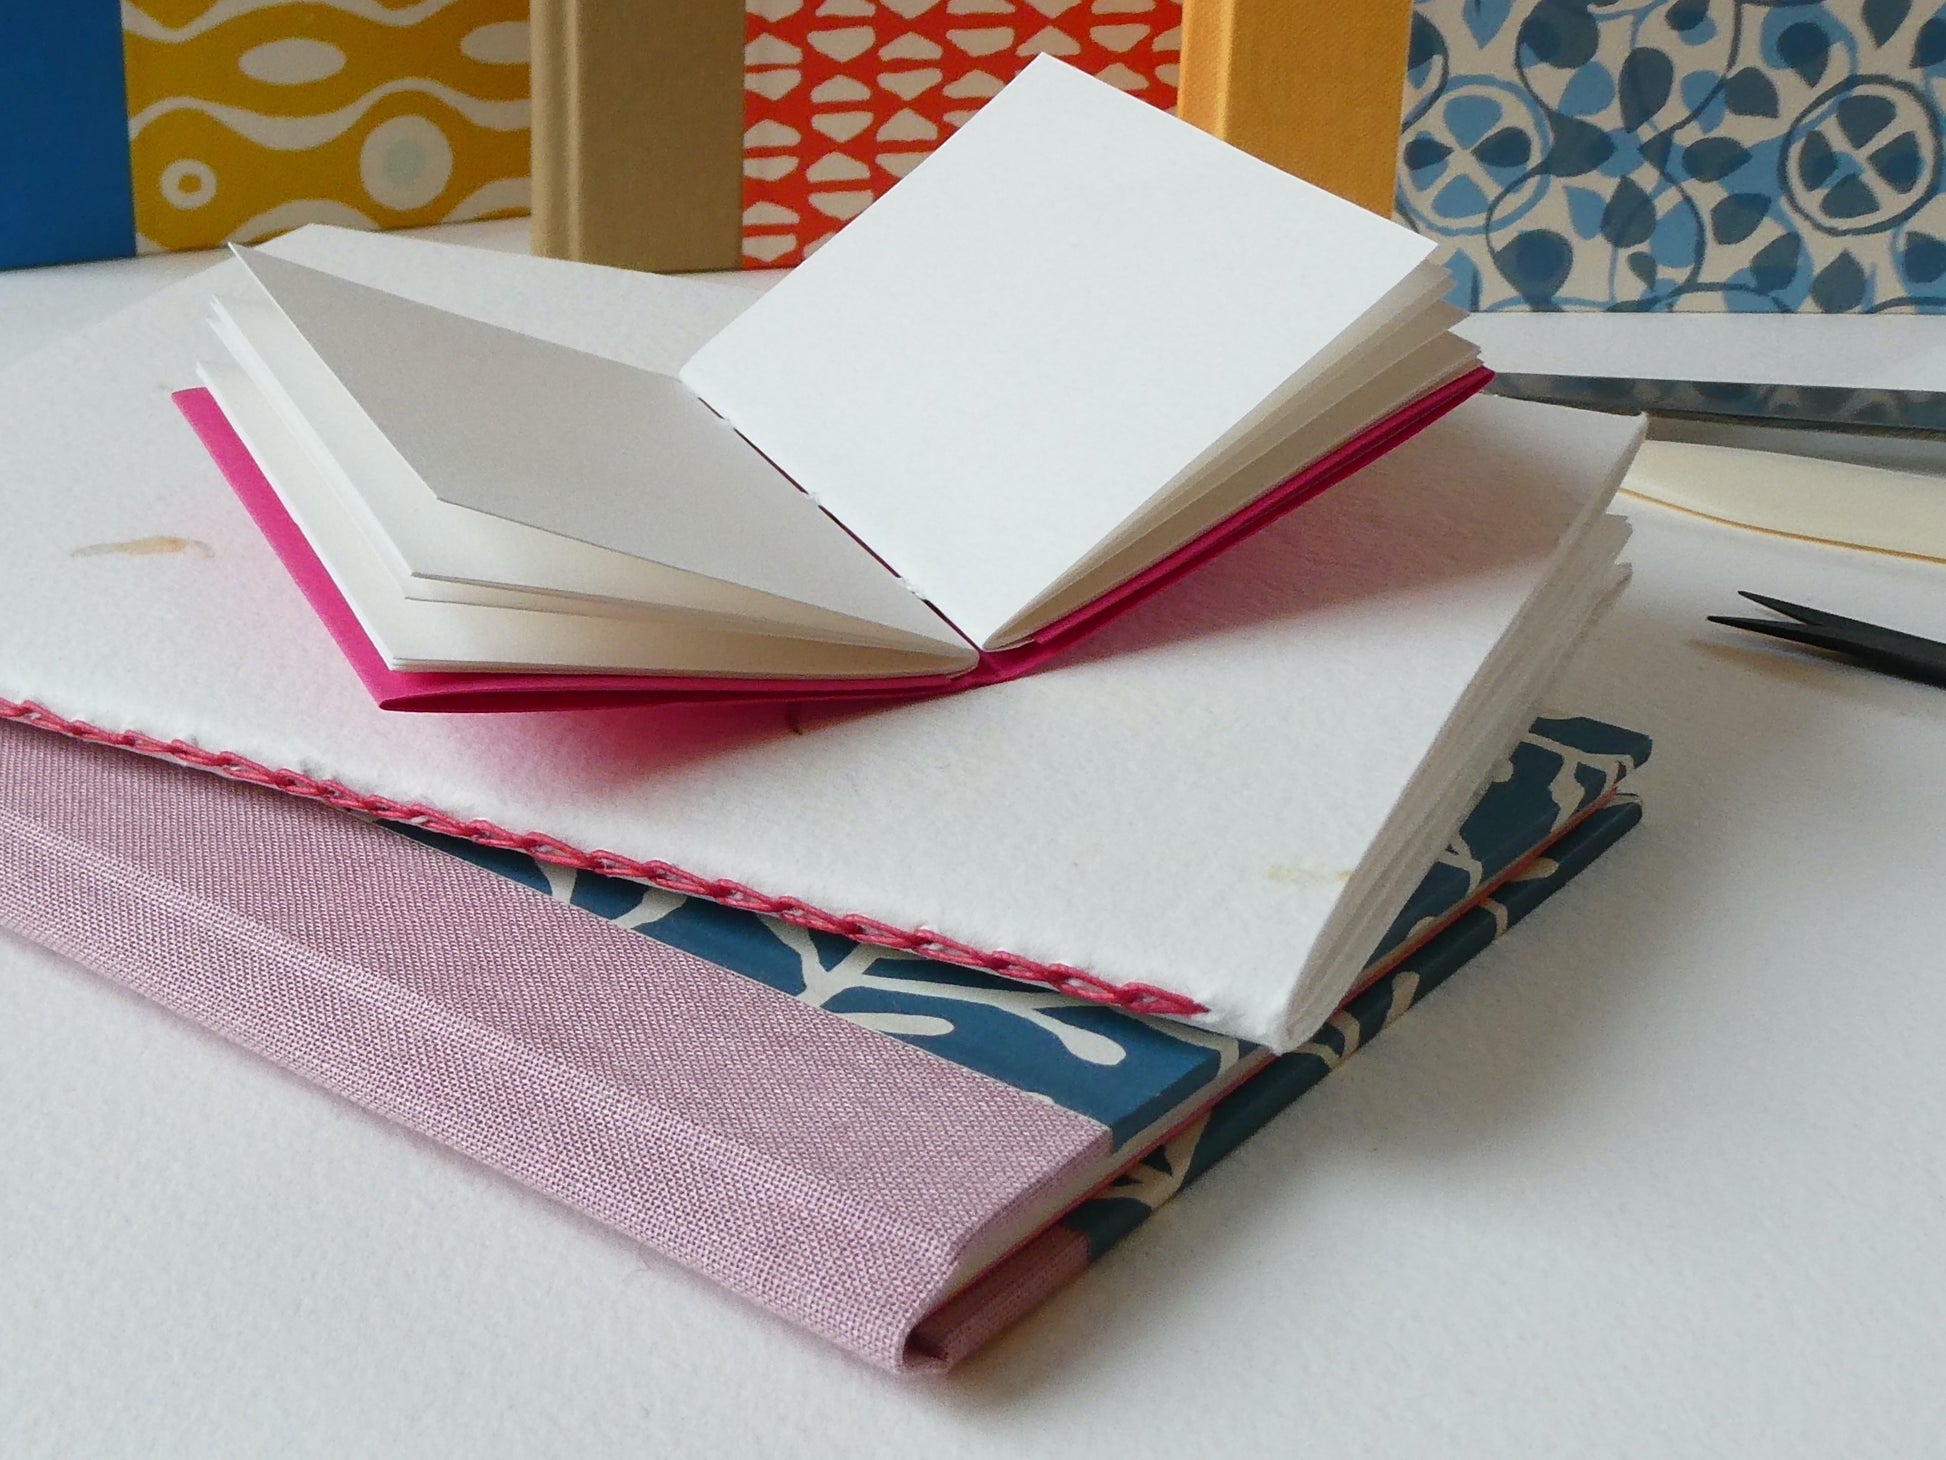 Three sewn notebooks bookbinding workshop